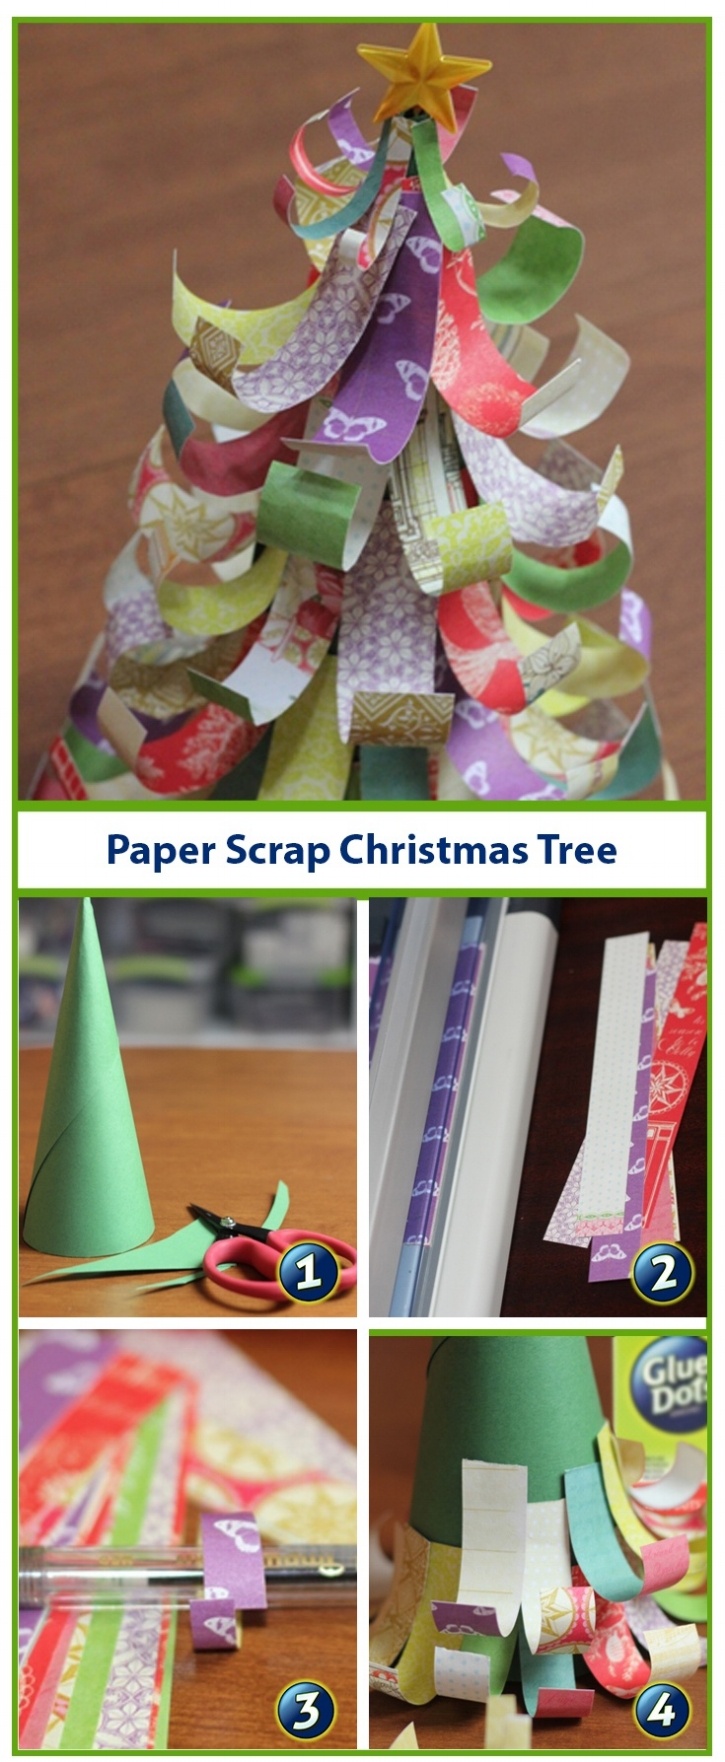 Christmas kids craft - make a paper scrap christmas tree!